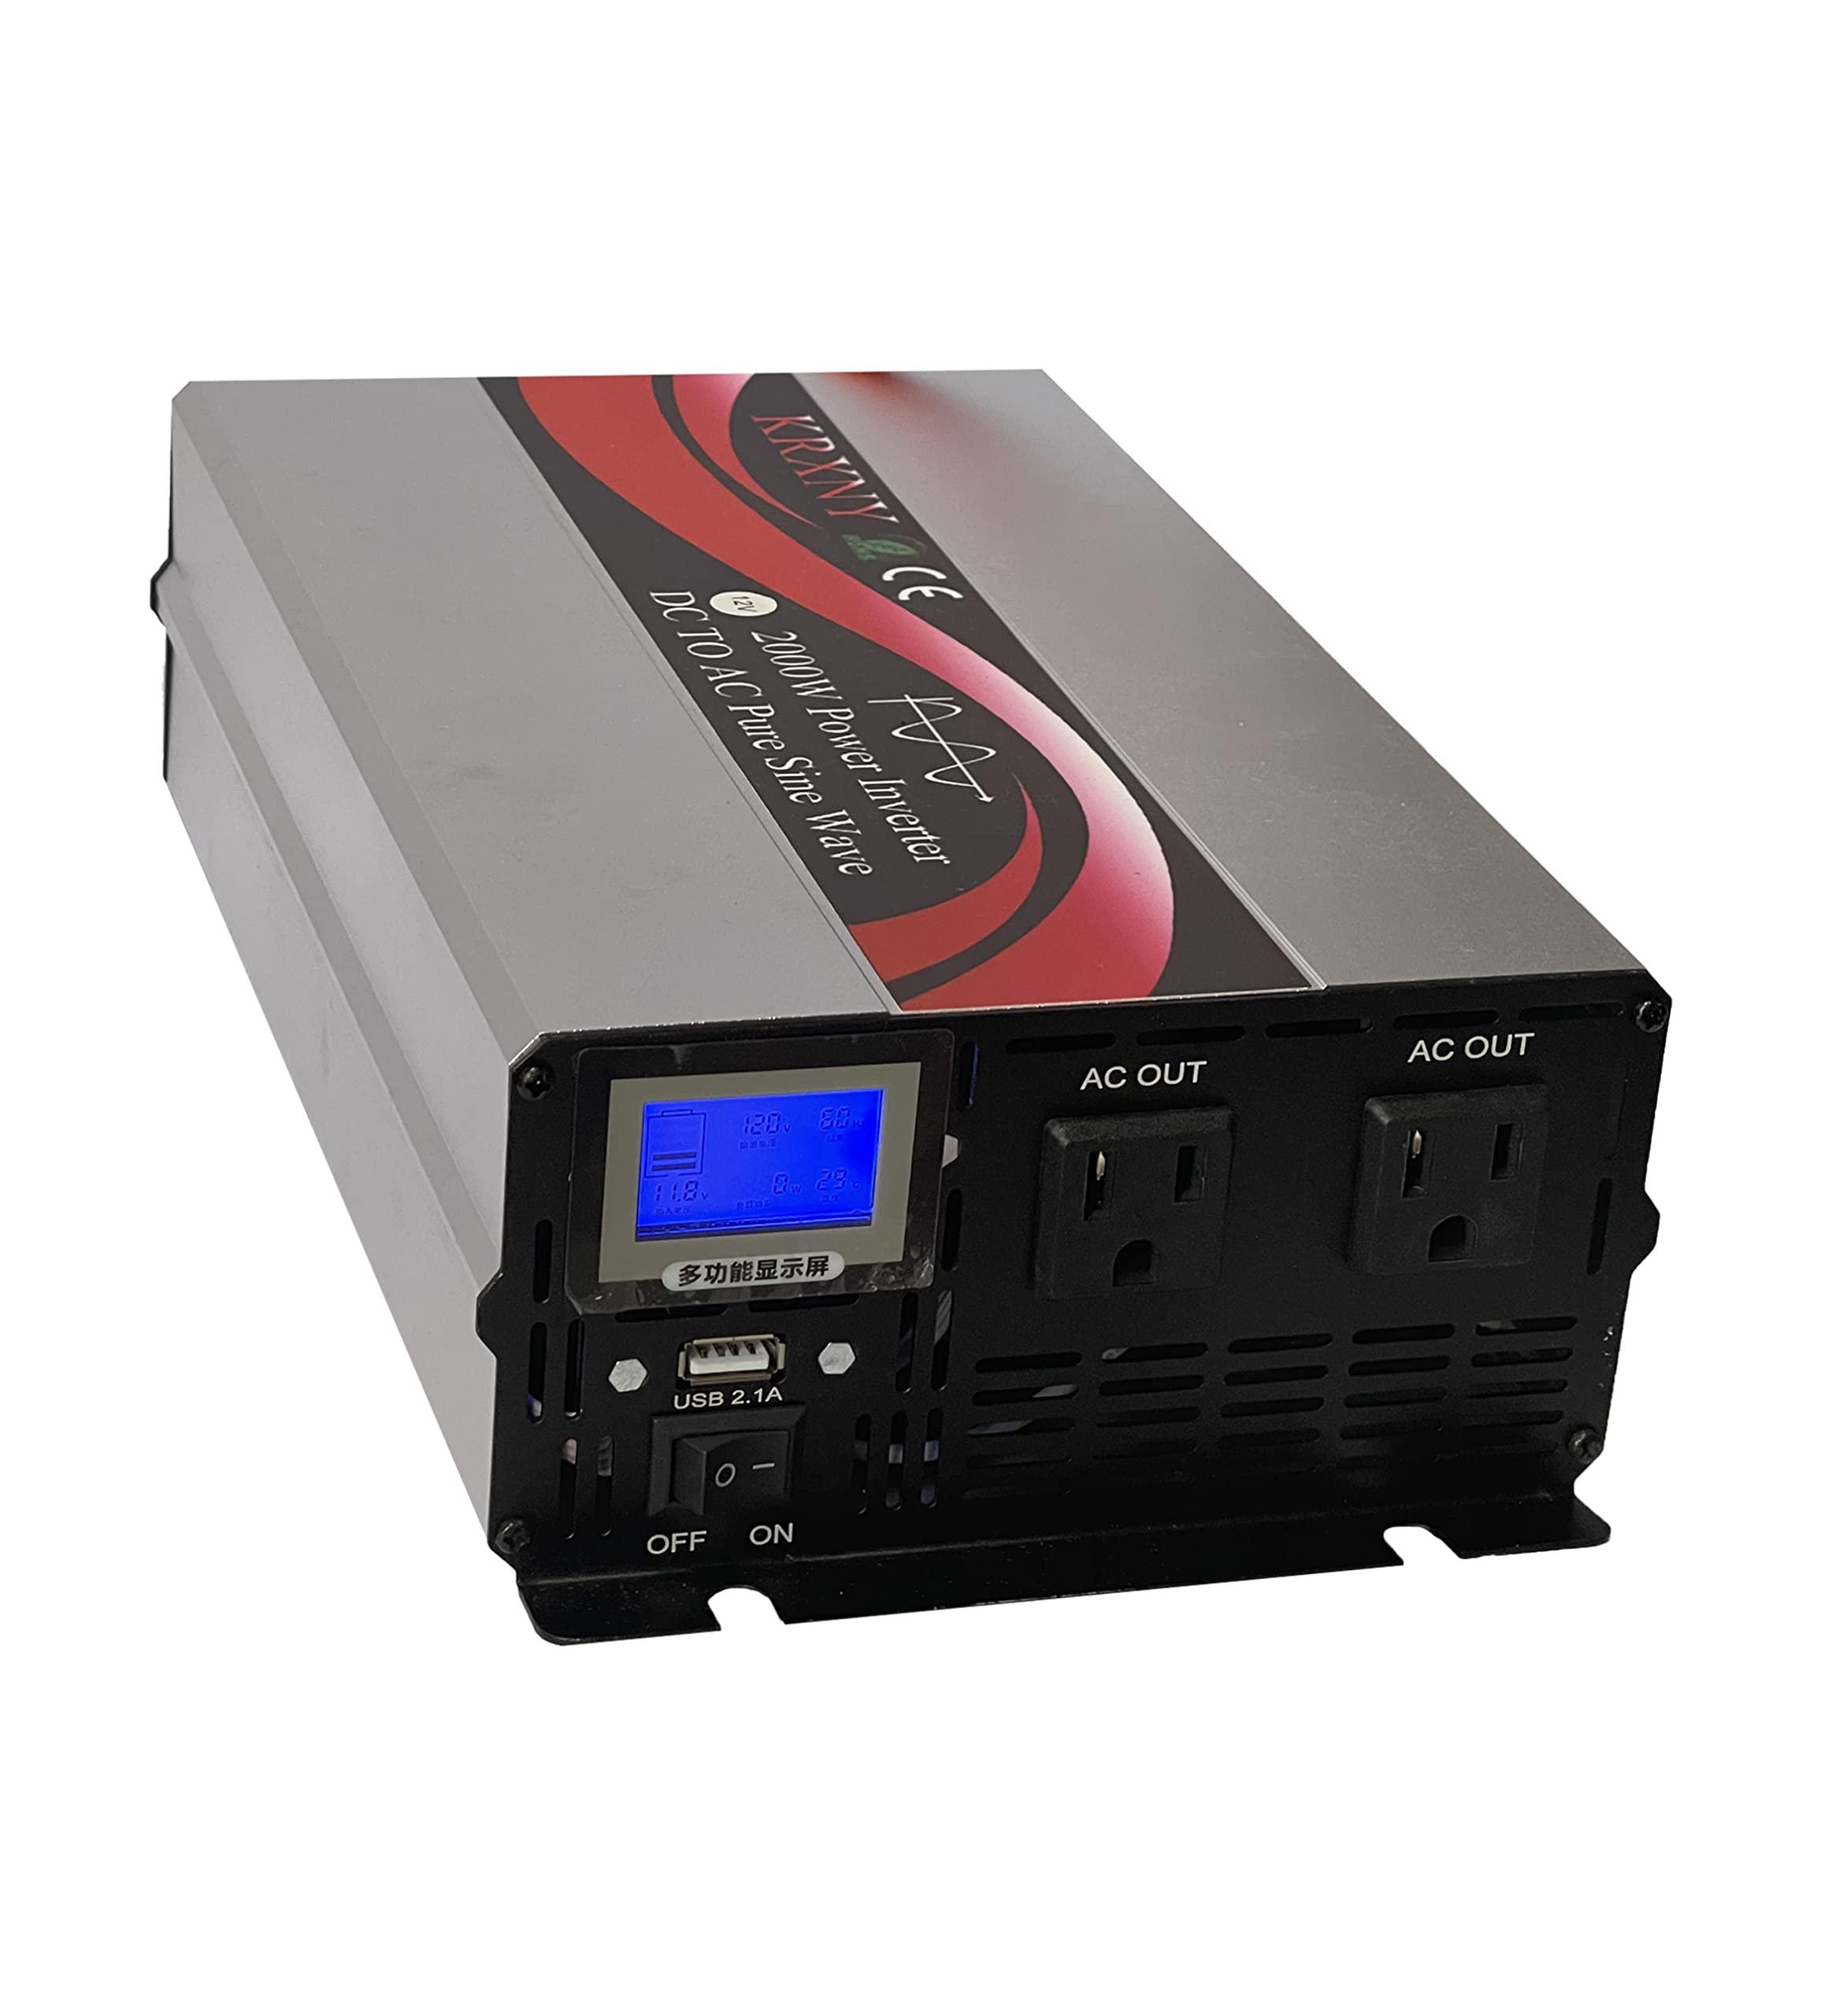 KRXNY 2000W car Power Inverter Pure Sine Wave 12V Dc to 120V Ac 60HZ with LcD Display USB